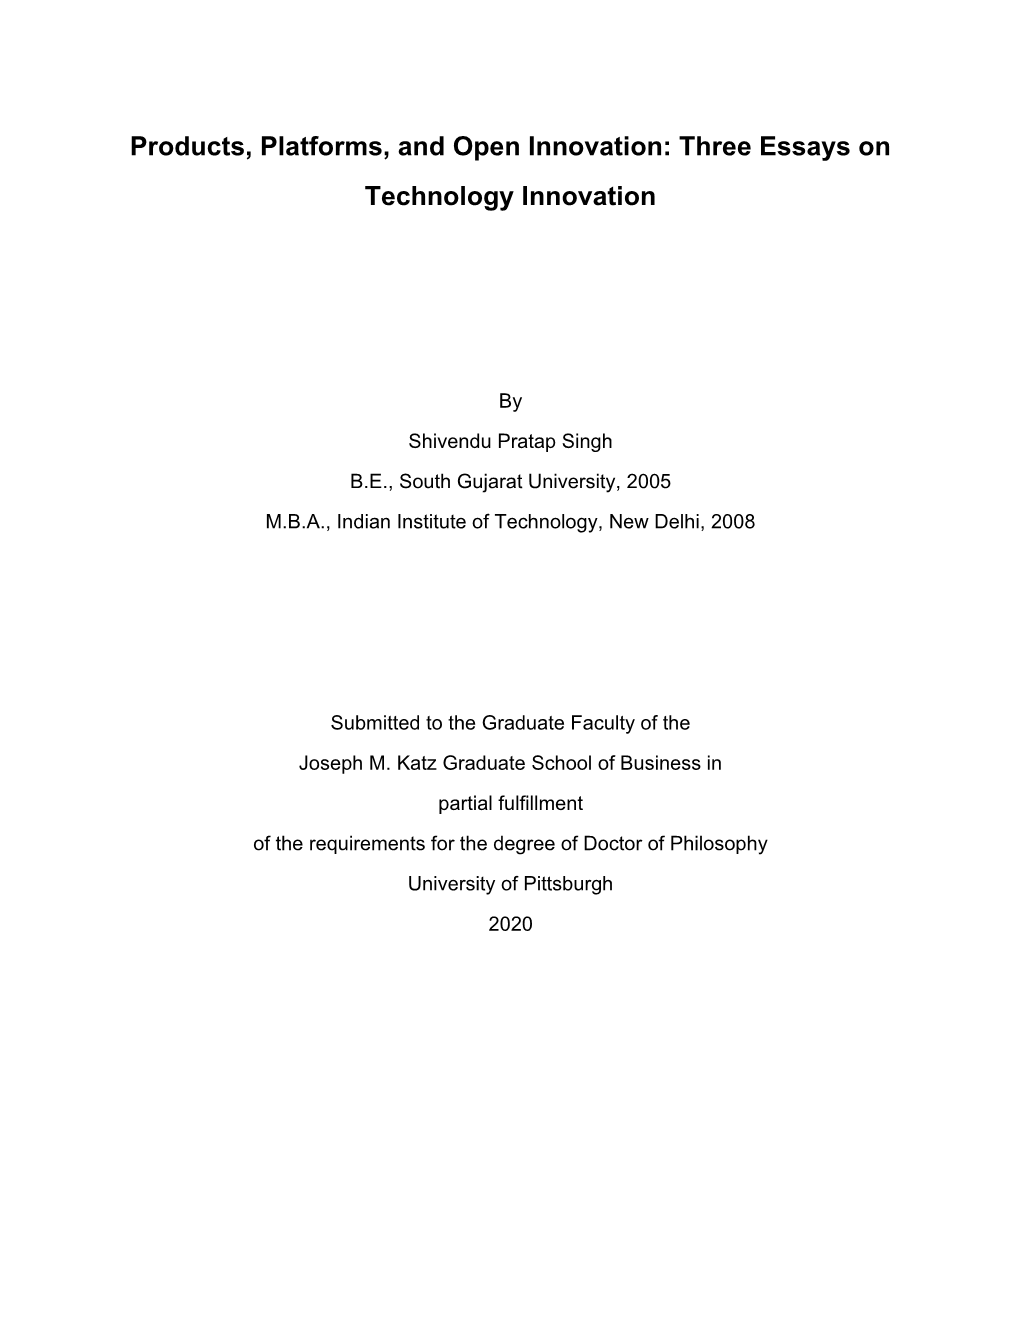 Three Essays on Technology Innovation